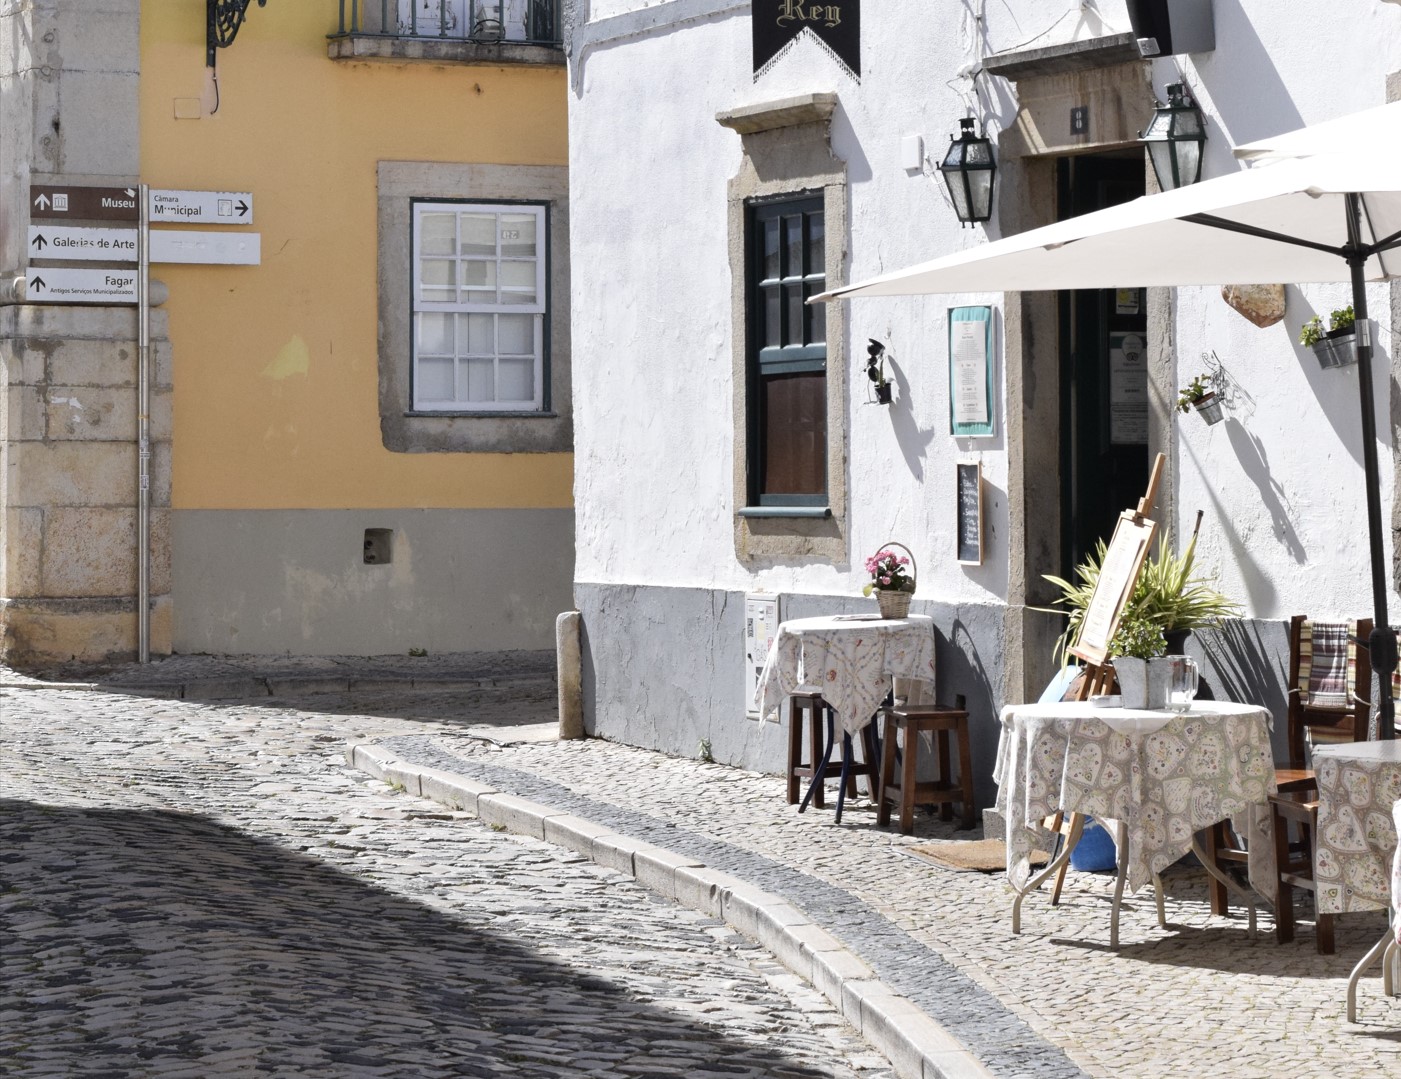 Faro streets, Portugal